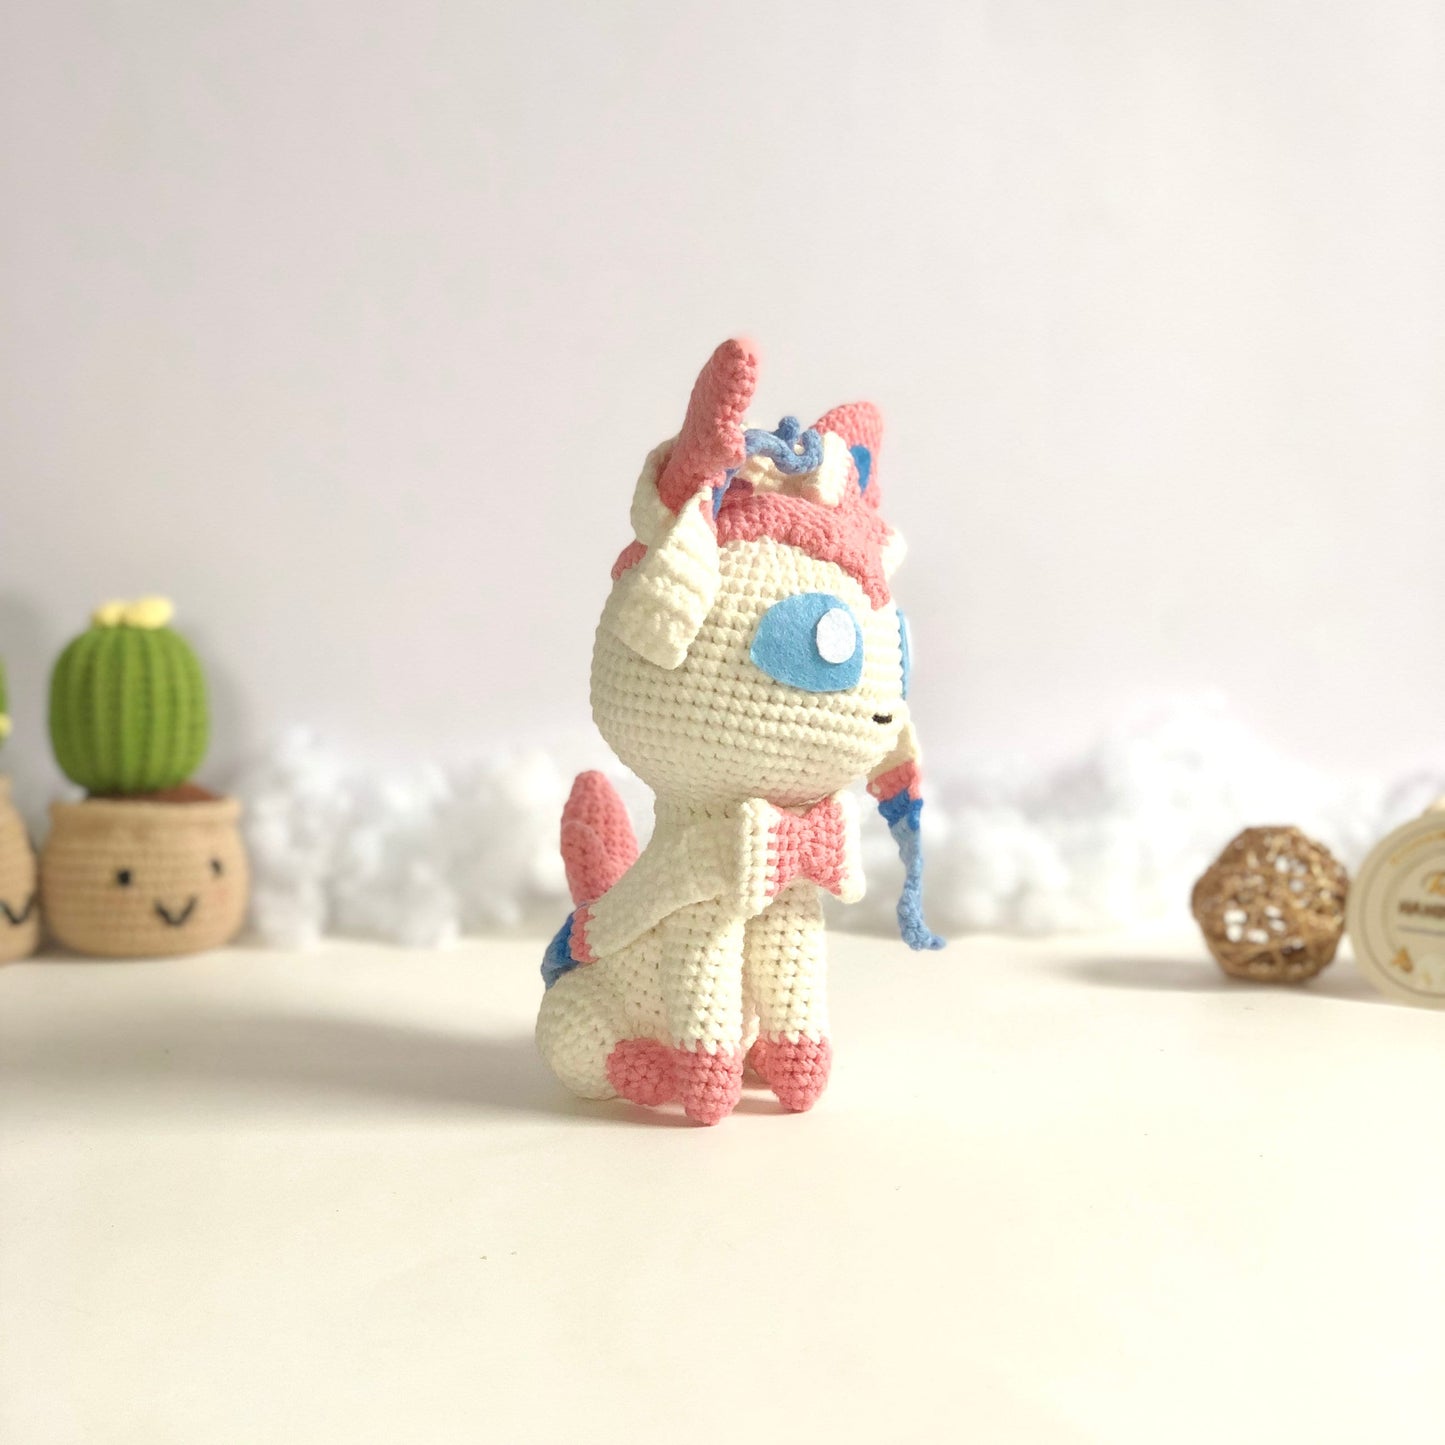 Handmade Cotton Yarn Sylveon Inspired, Crochet Sylveon, Inspired by Pokemon, Amigurumi Toy, cute, toddler, kid, adult hobby